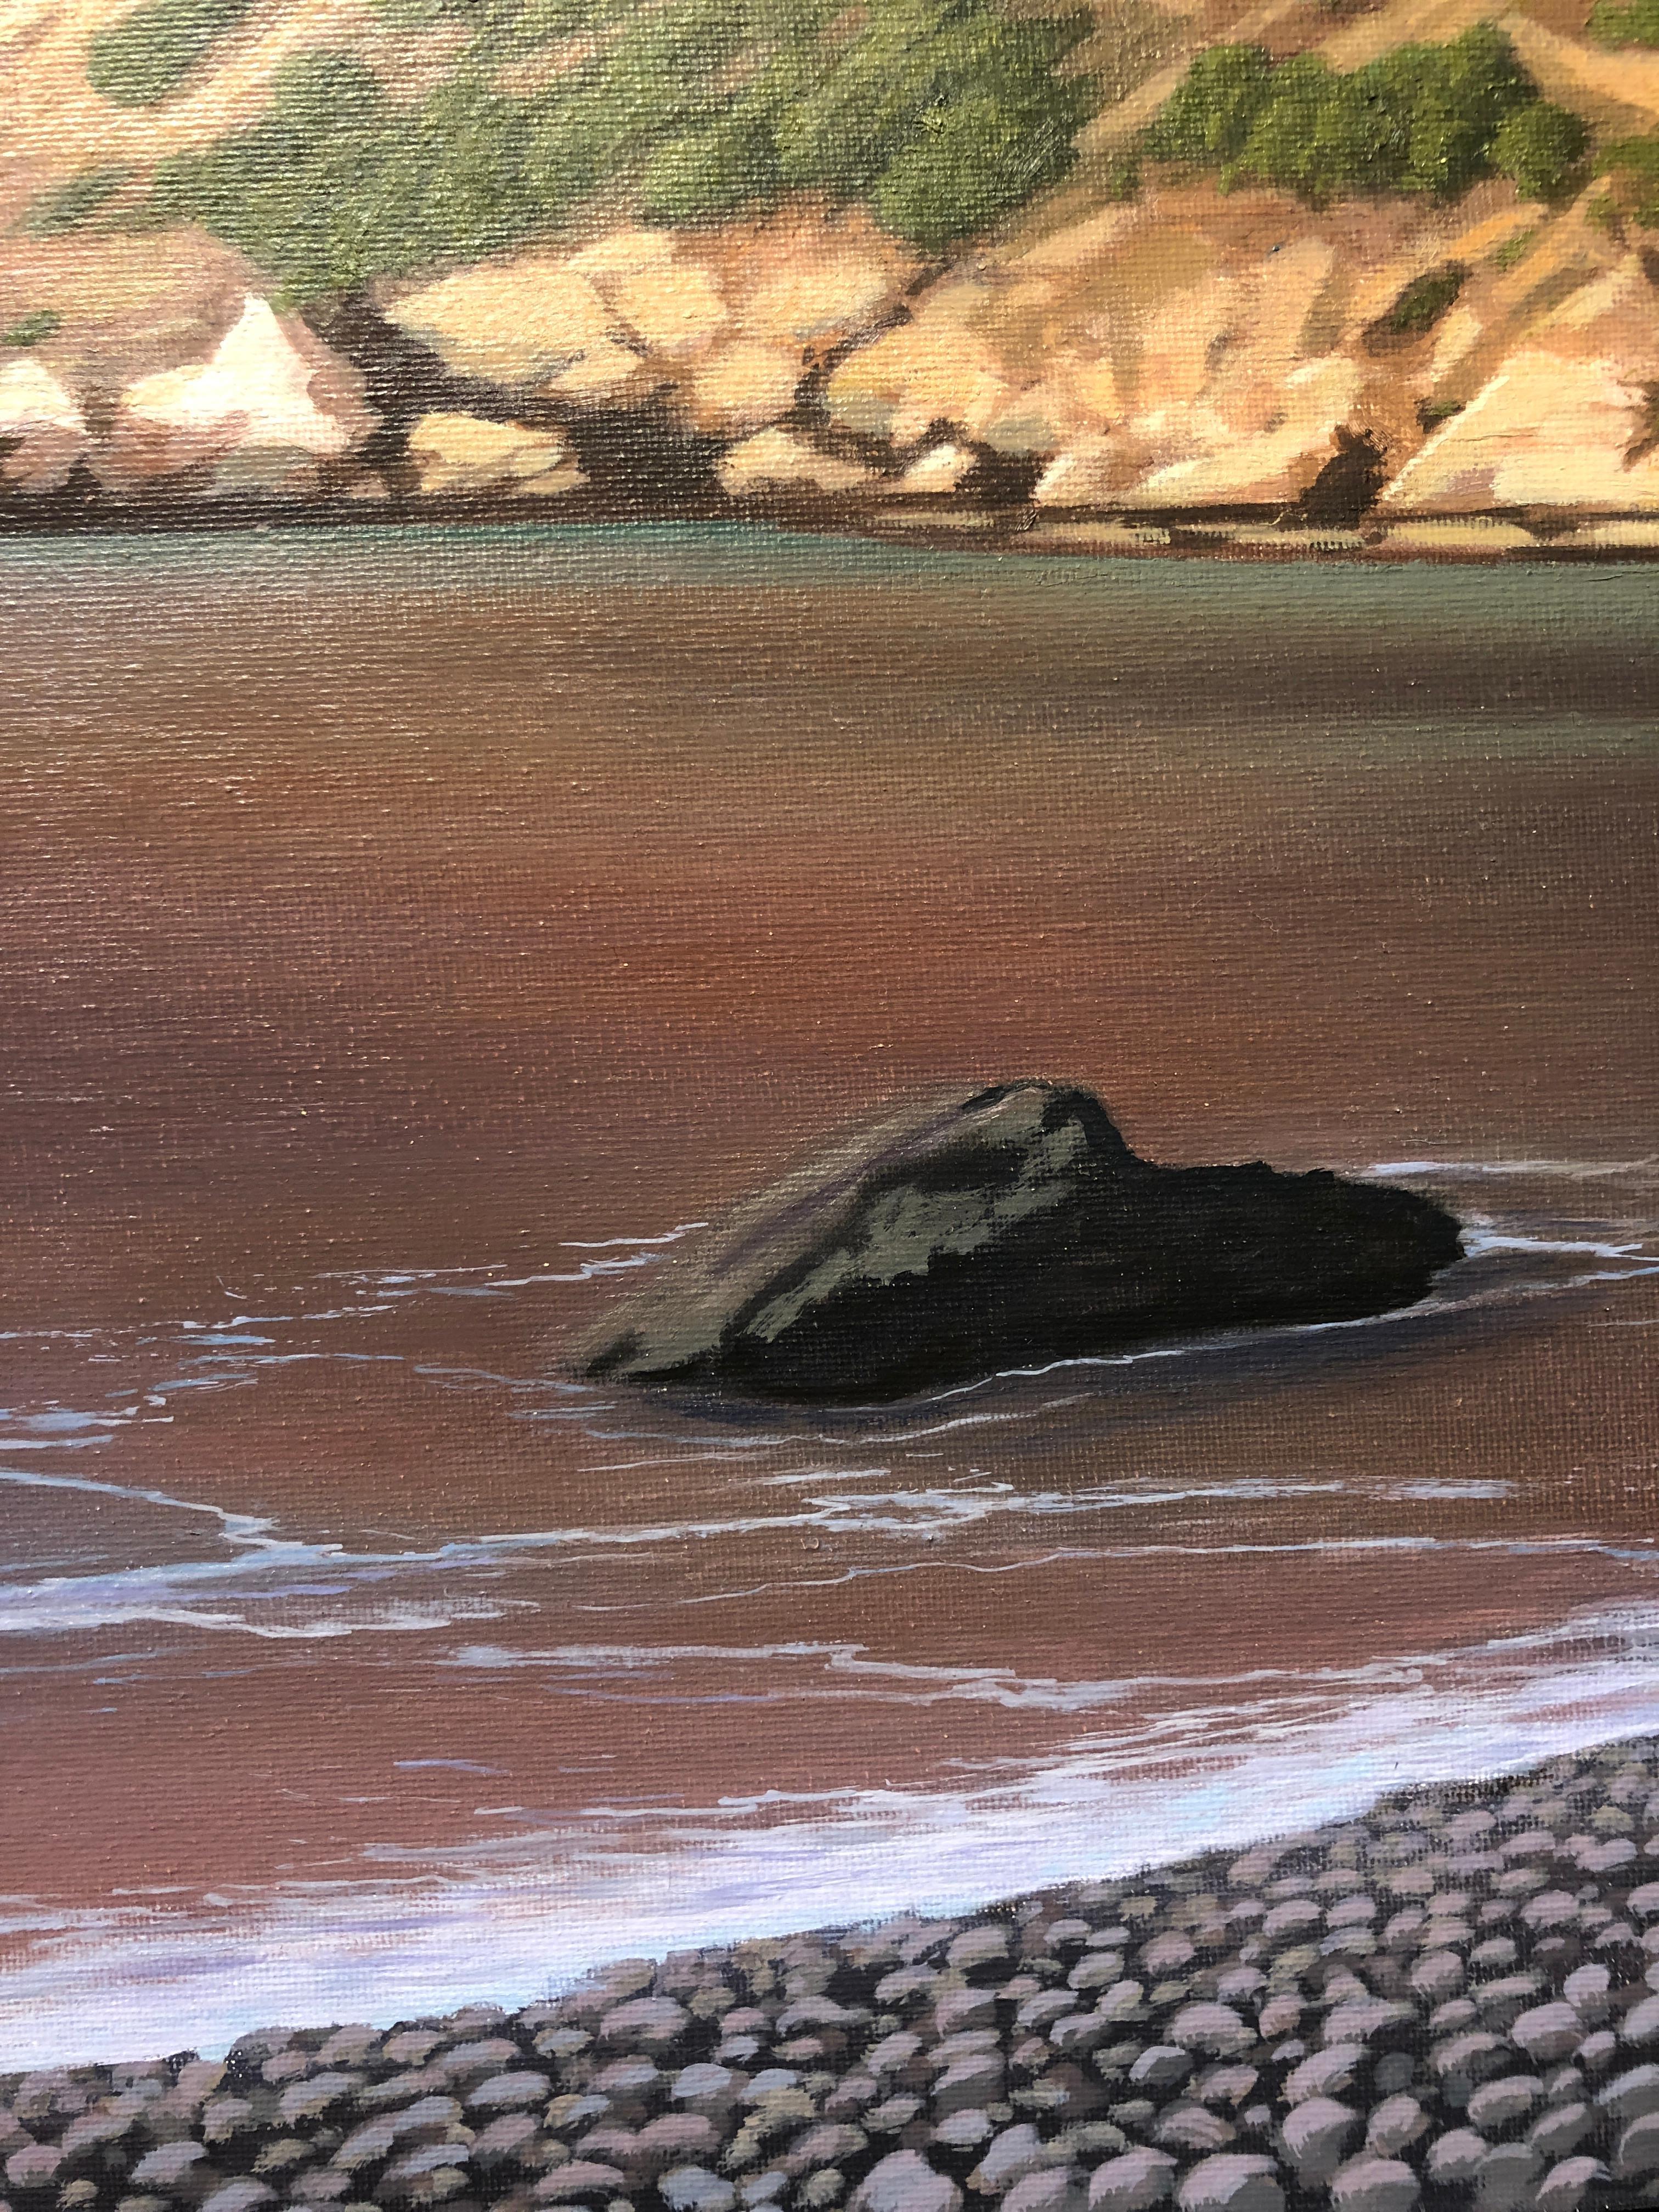  Cala Granadella, Rocky Cliffs Diving into the Ocean, Detailed Surreal Landscape - Contemporary Painting by René Monzón Relova “Pozas”